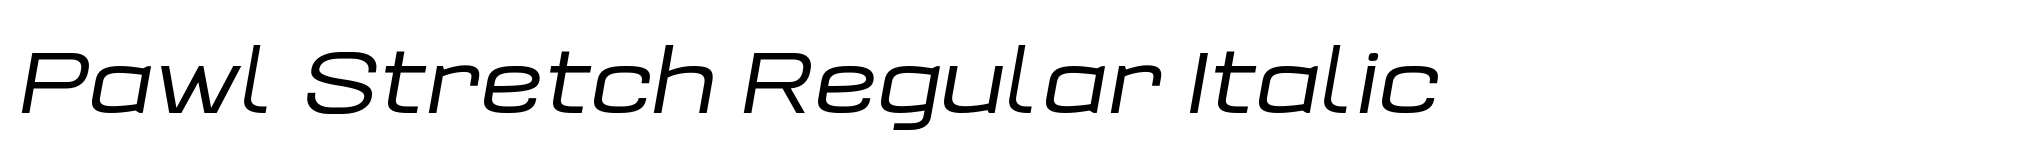 Pawl Stretch Regular Italic image